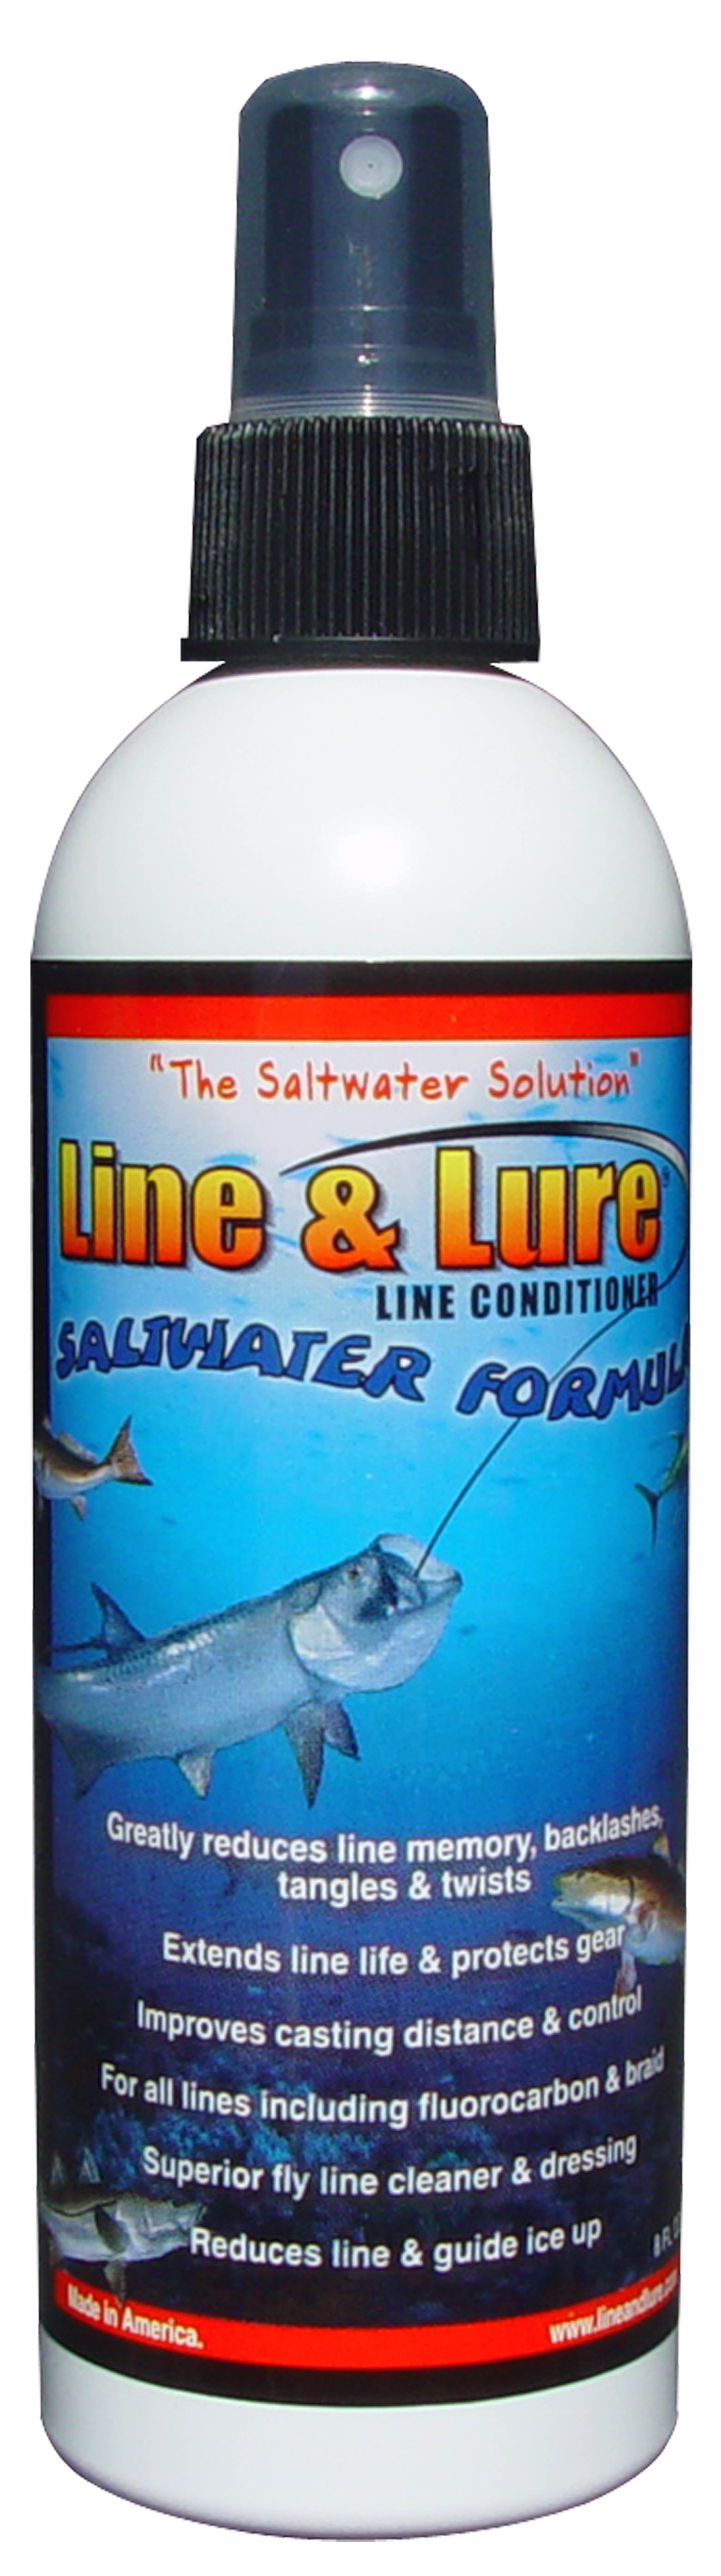 Line & Lure Conditioner Kevin VanDam's 16oz Spray 